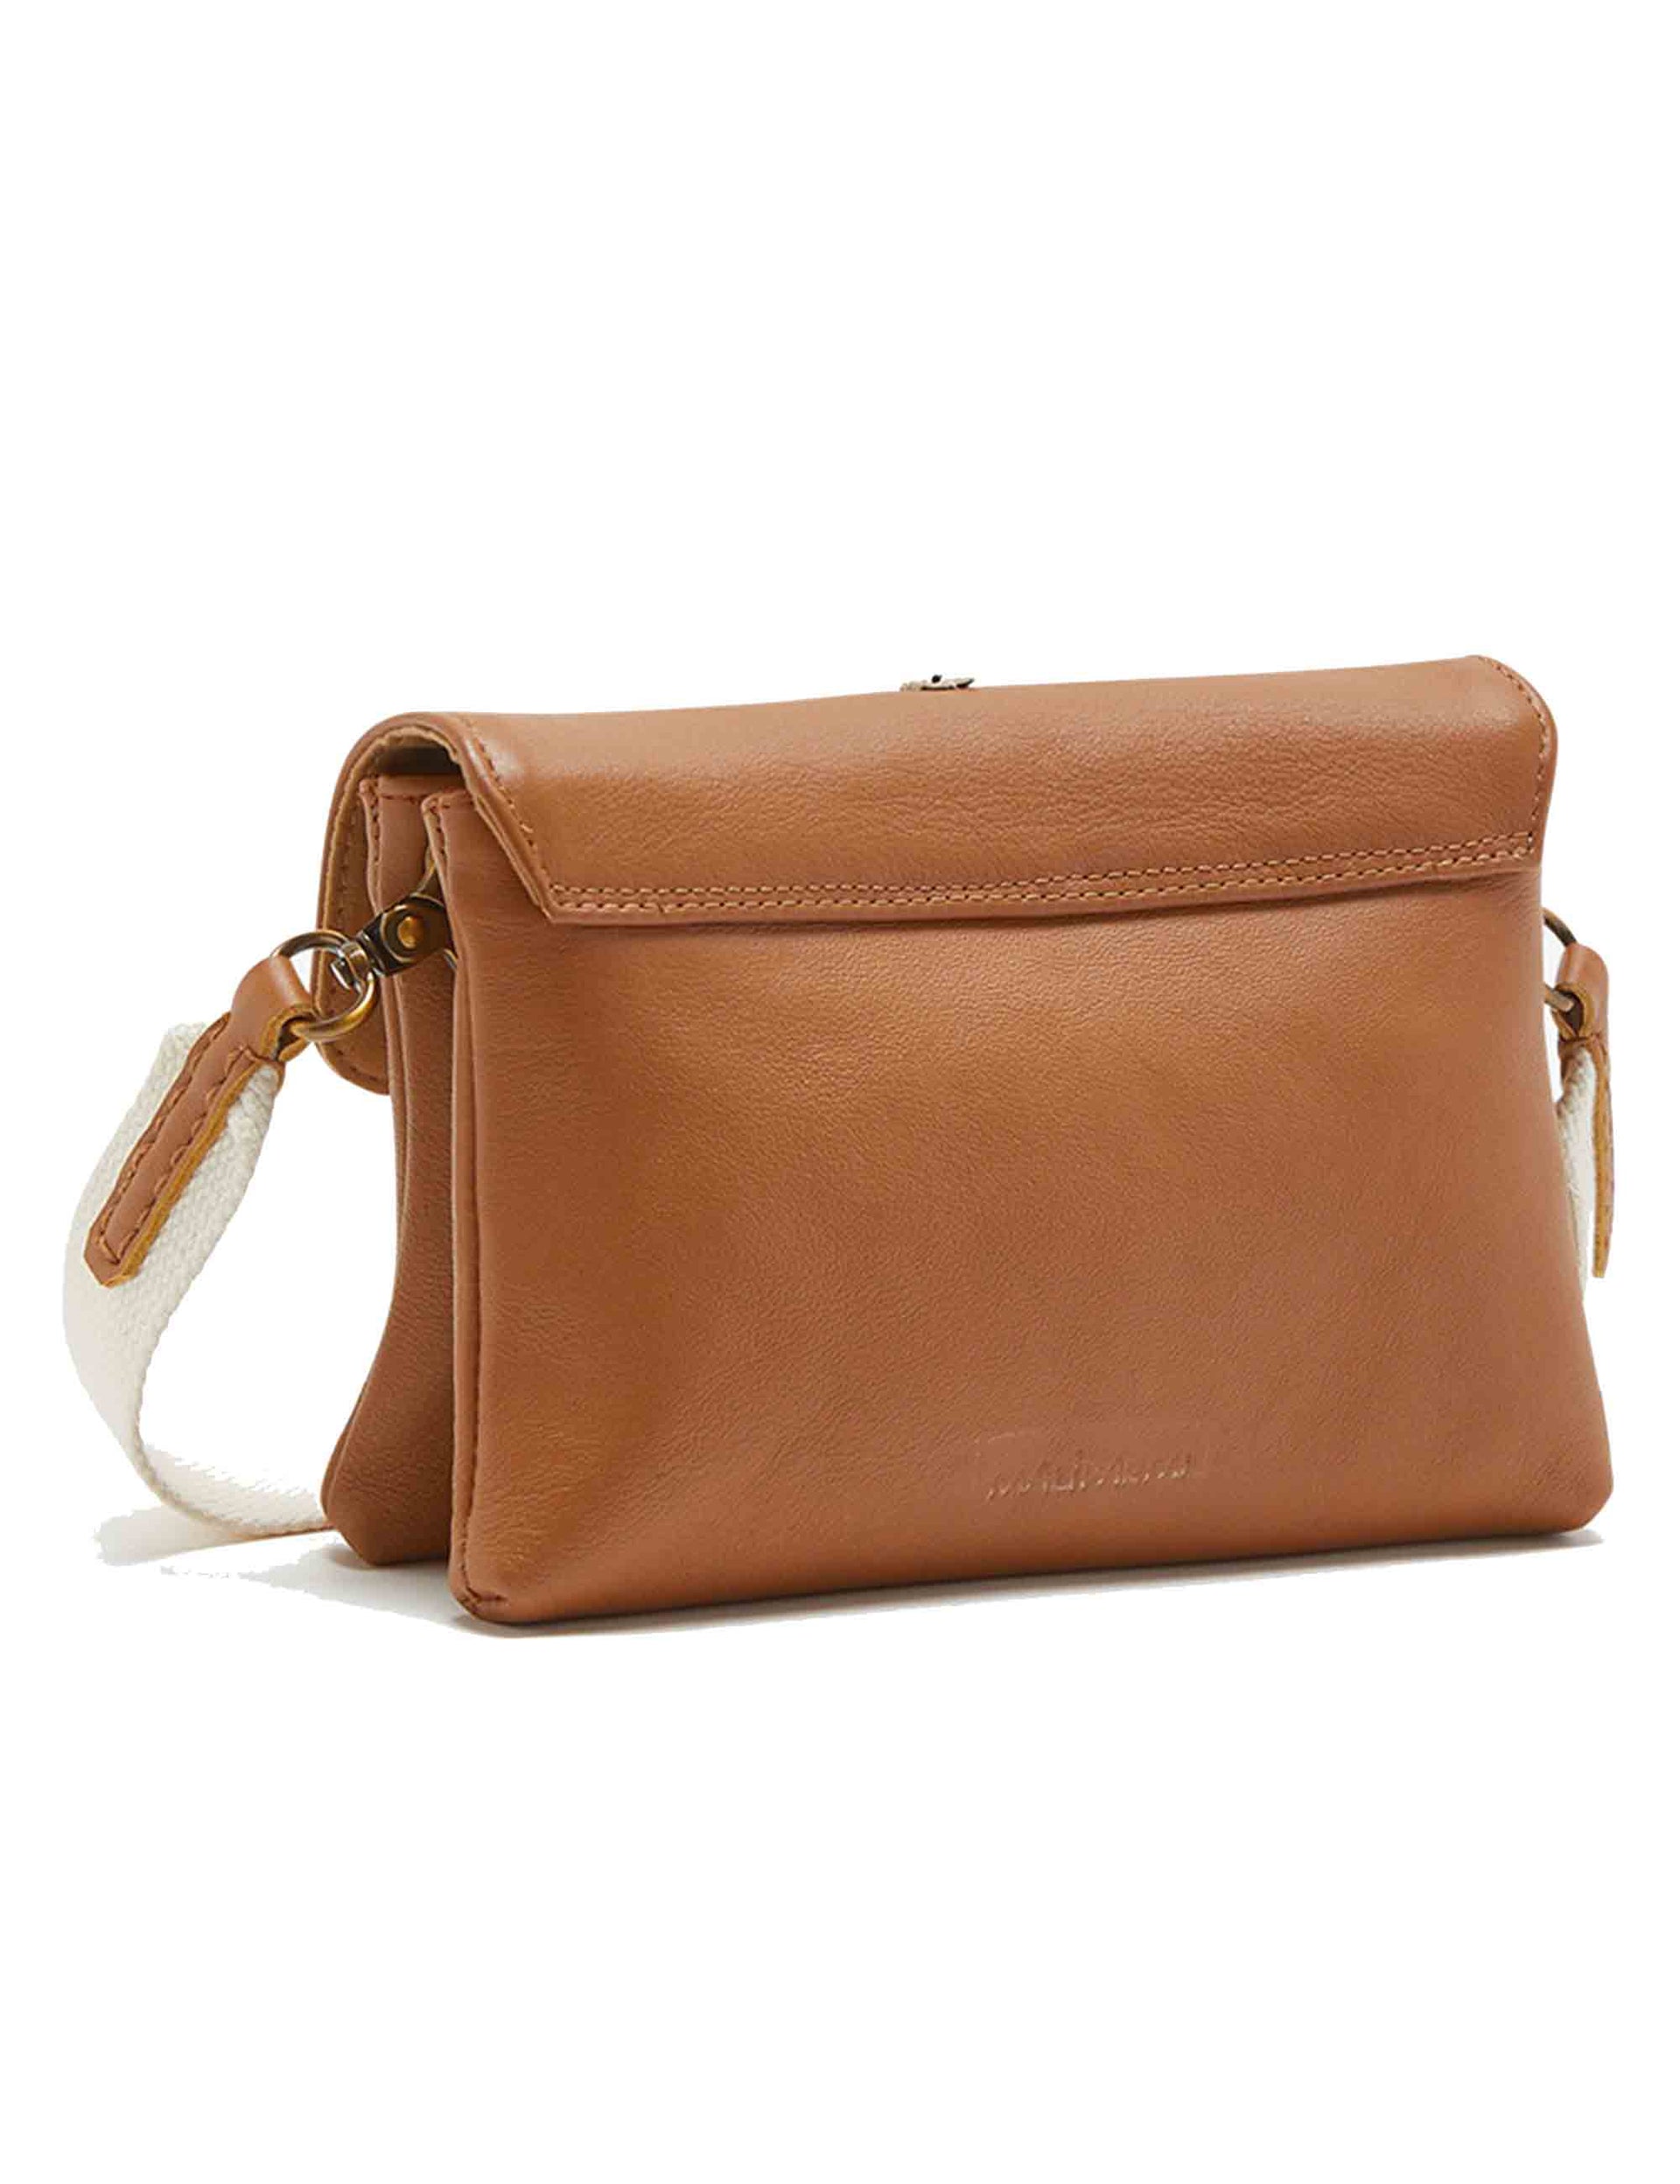 Malì women's shoulder clutch bags in tan leather